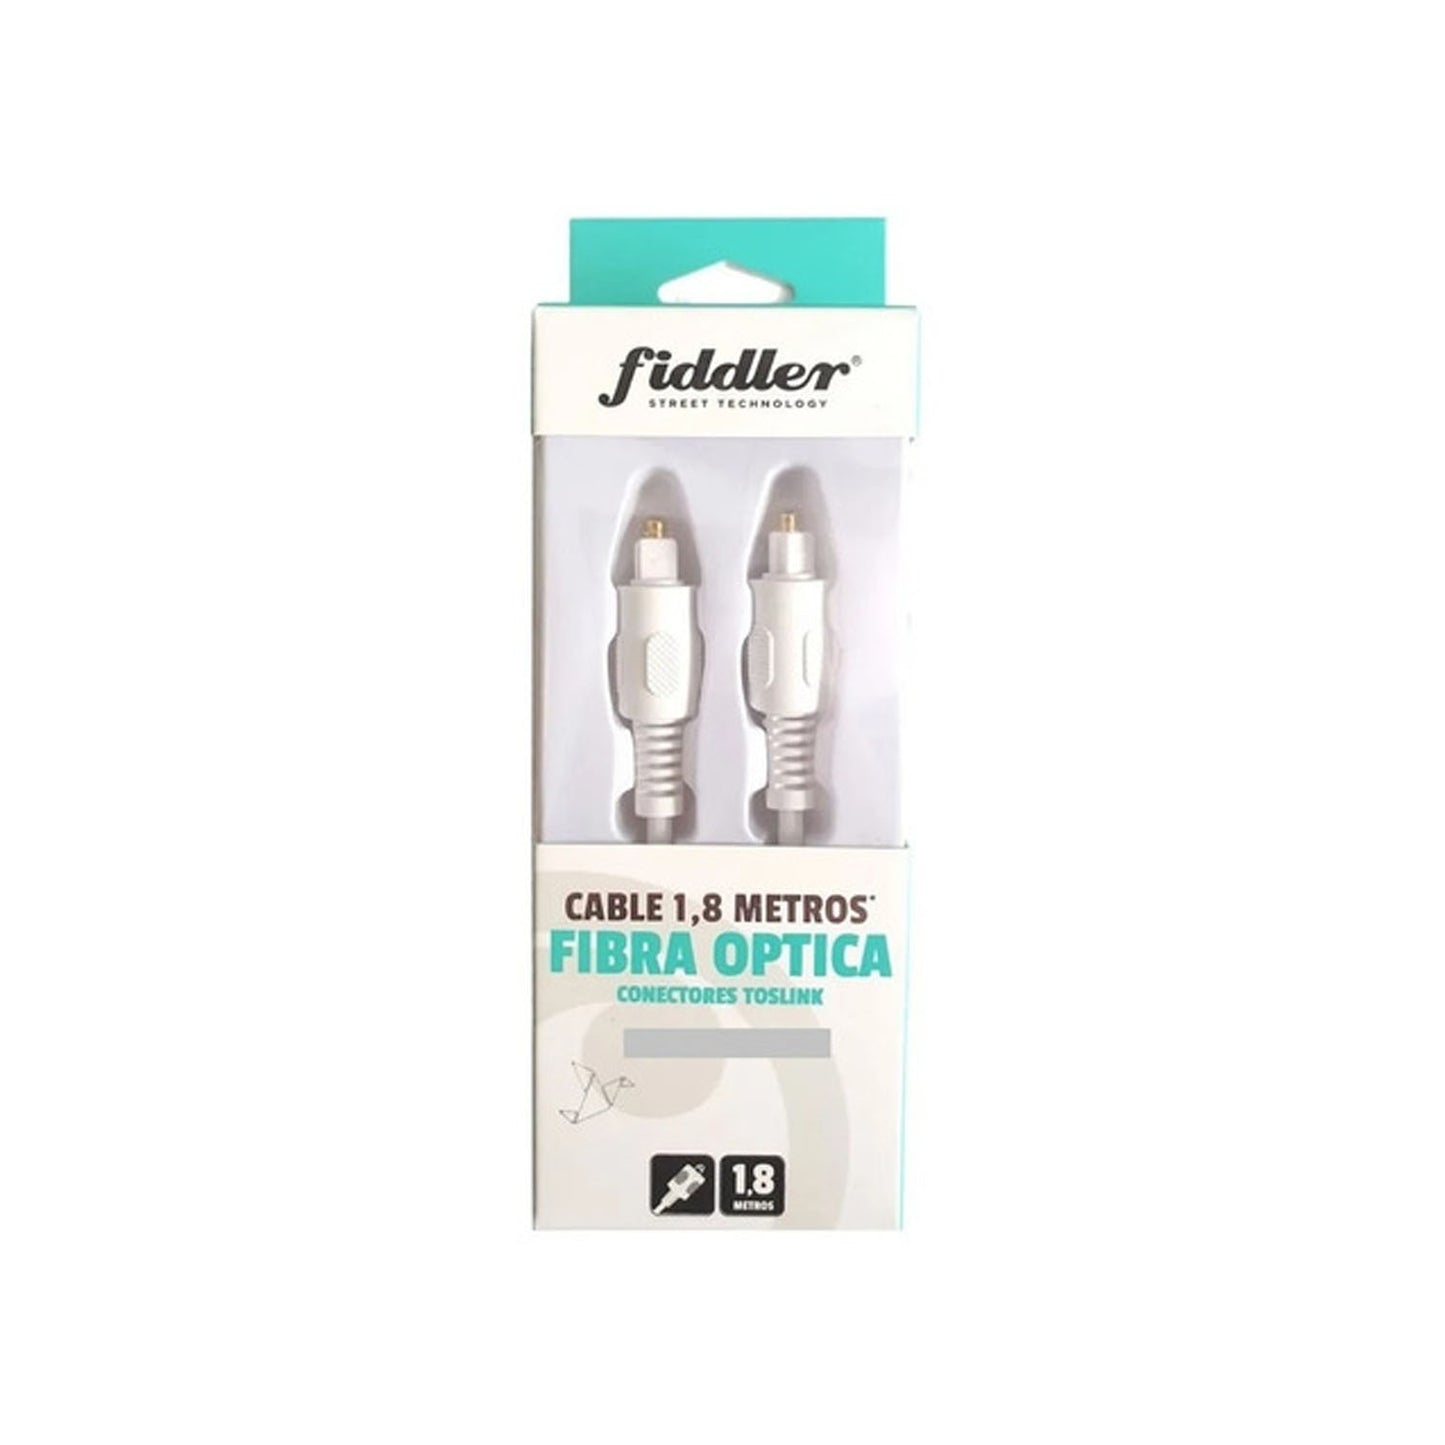 Cable Fibra Optica 1.8mts Conectores Toslink Fiddler